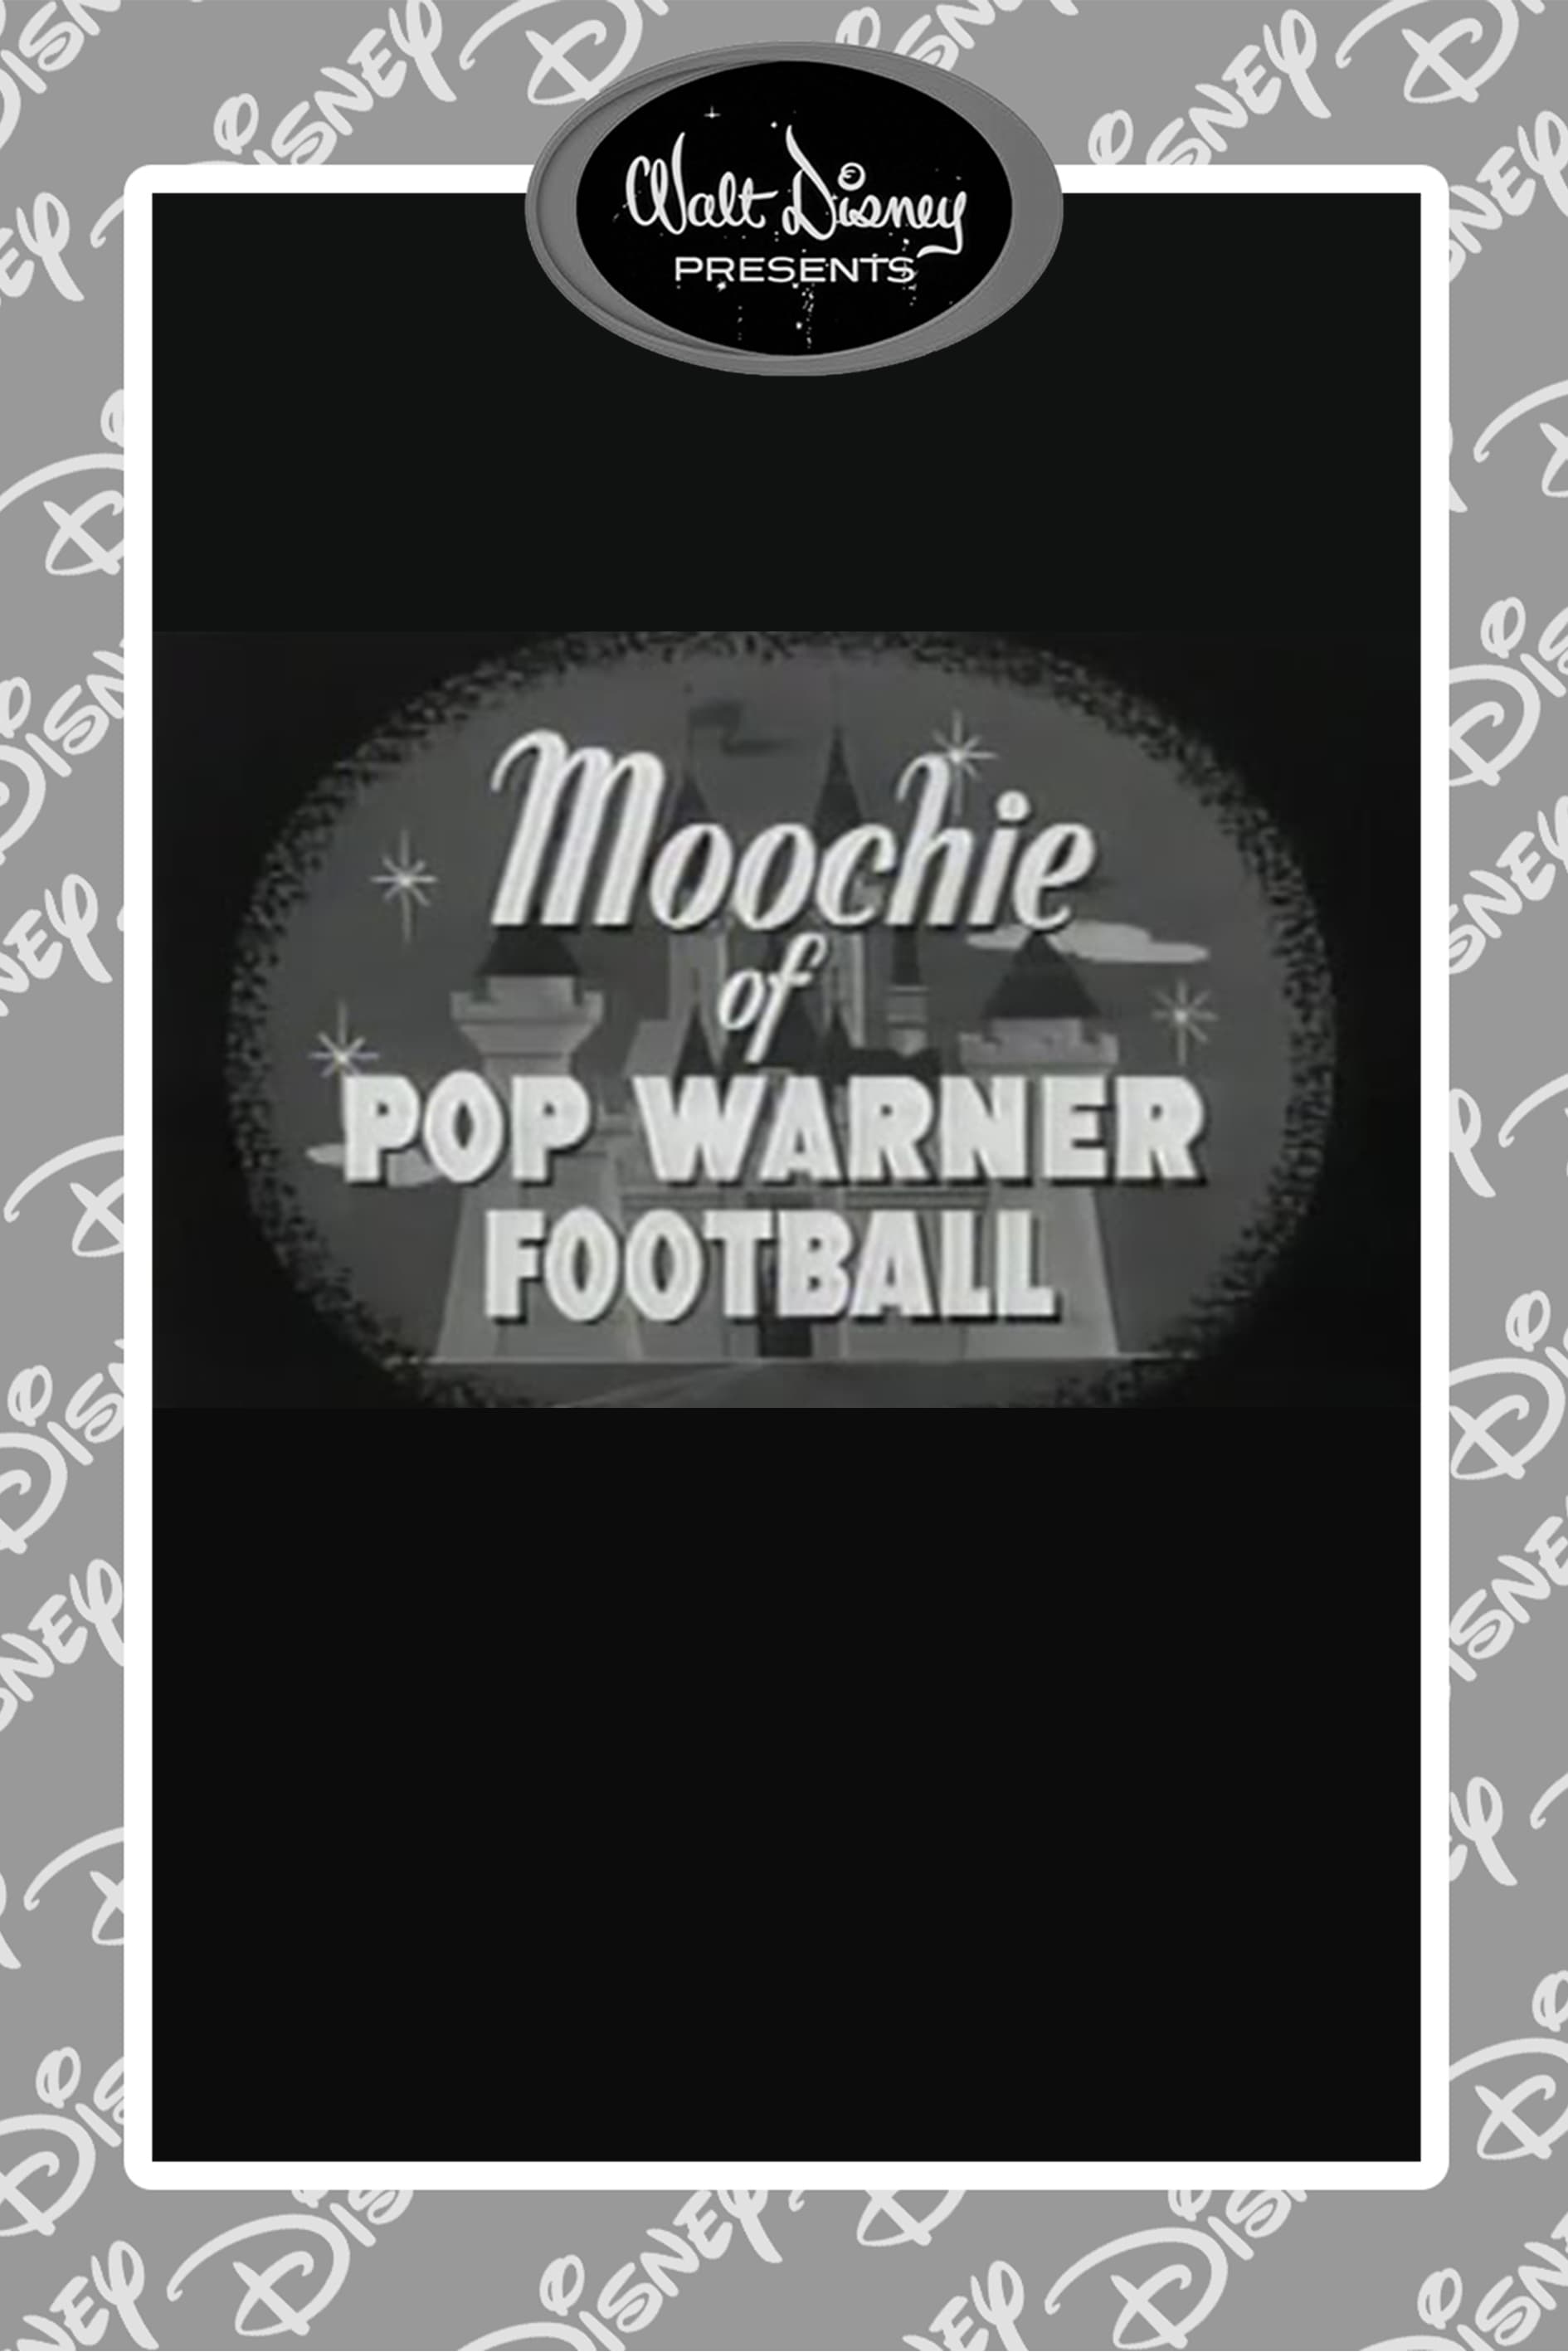 Moochie of Pop Warner Football (1960)